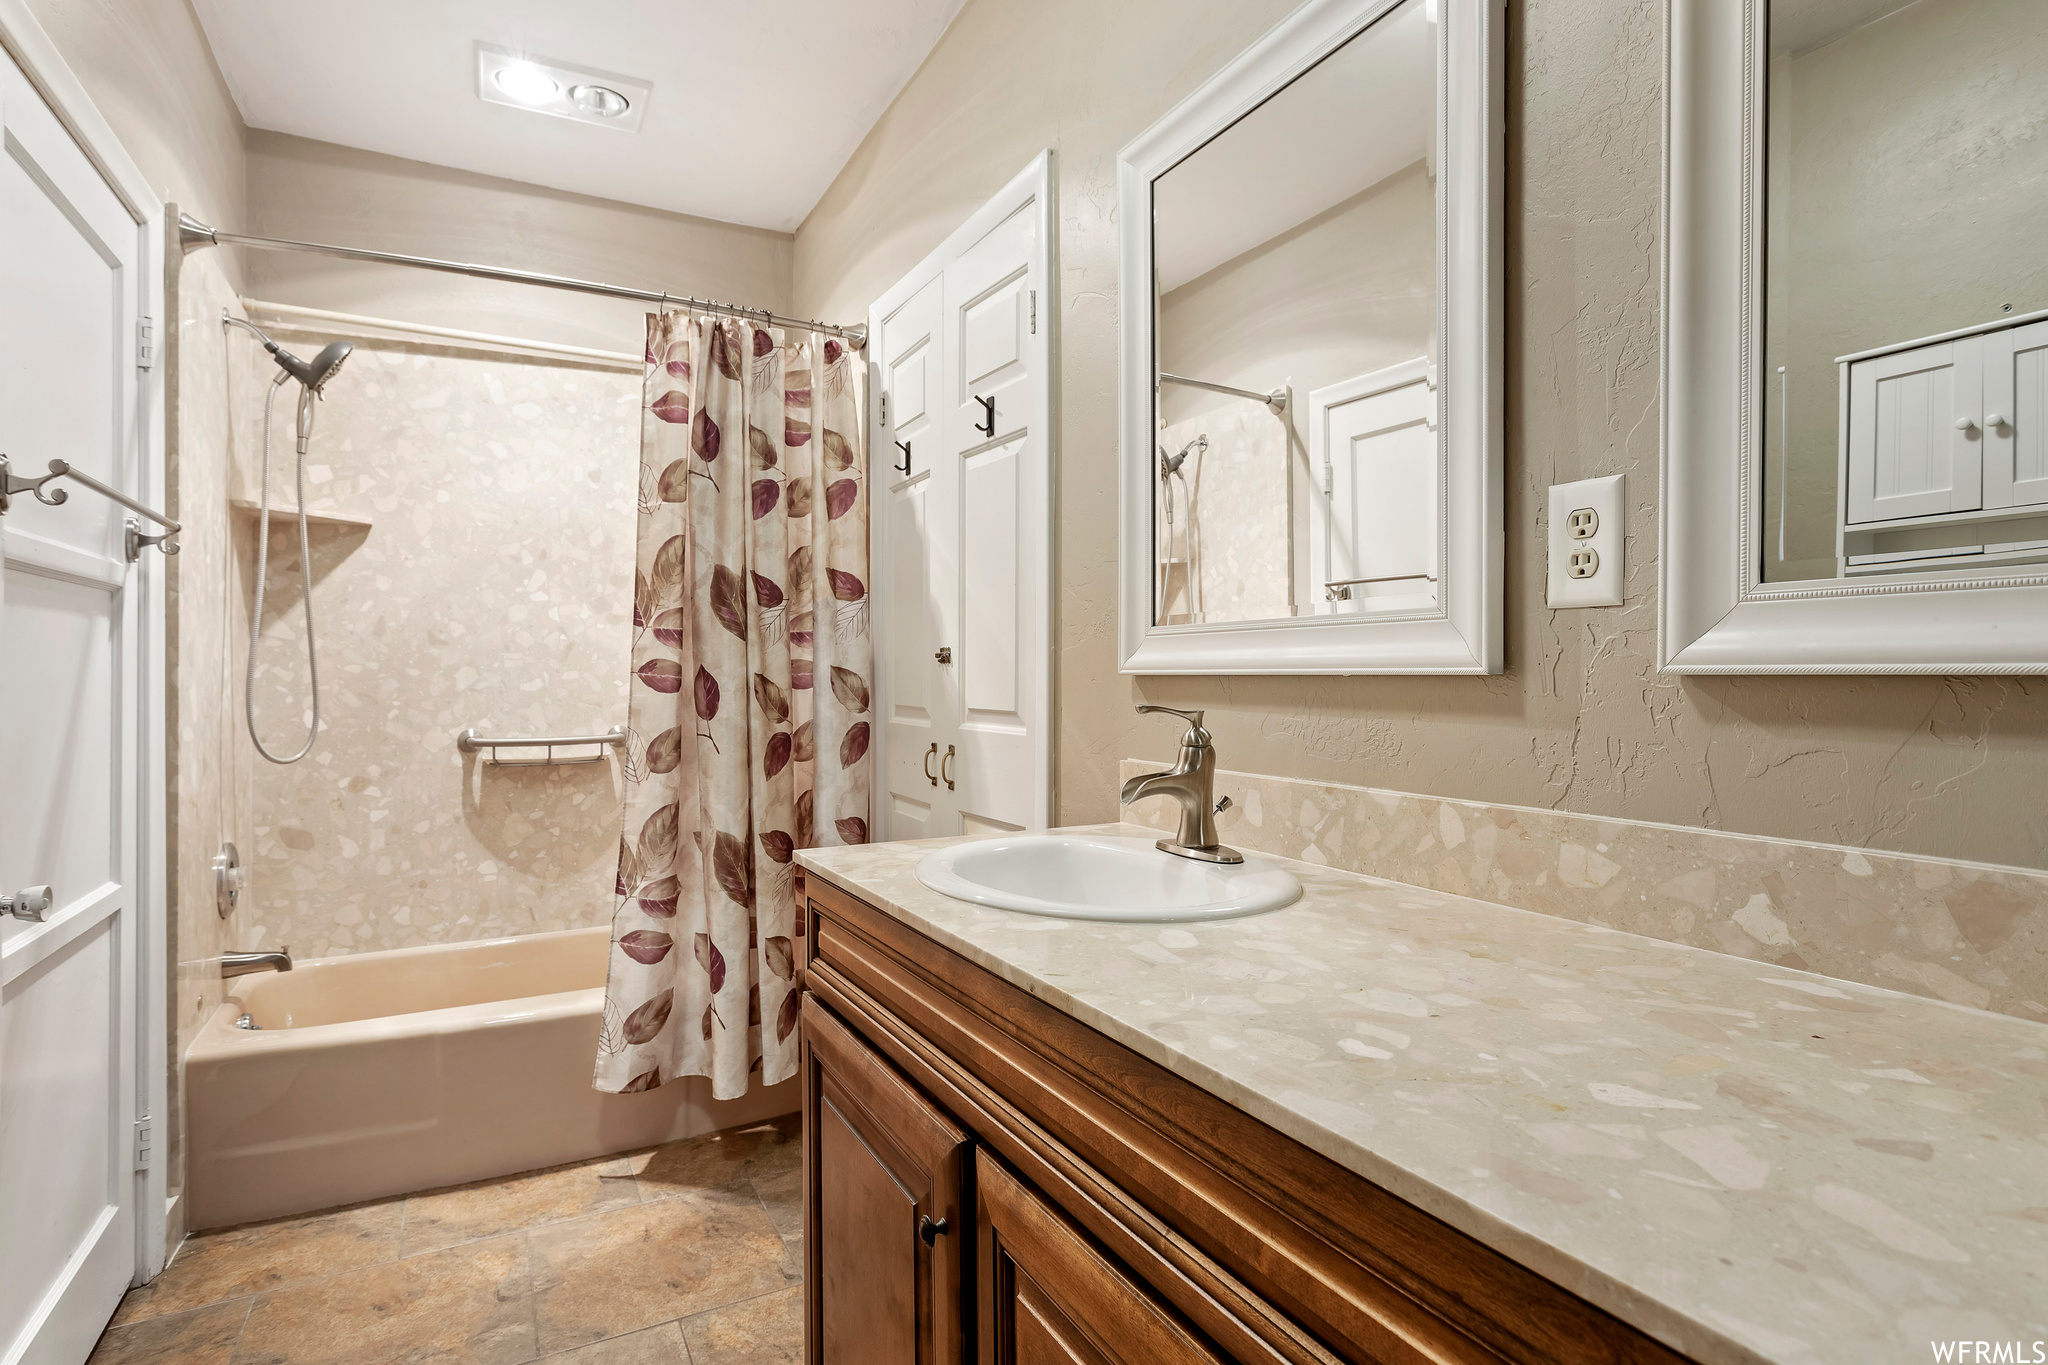 Bathroom featuring vanity, tile floors, and shower / bath combo